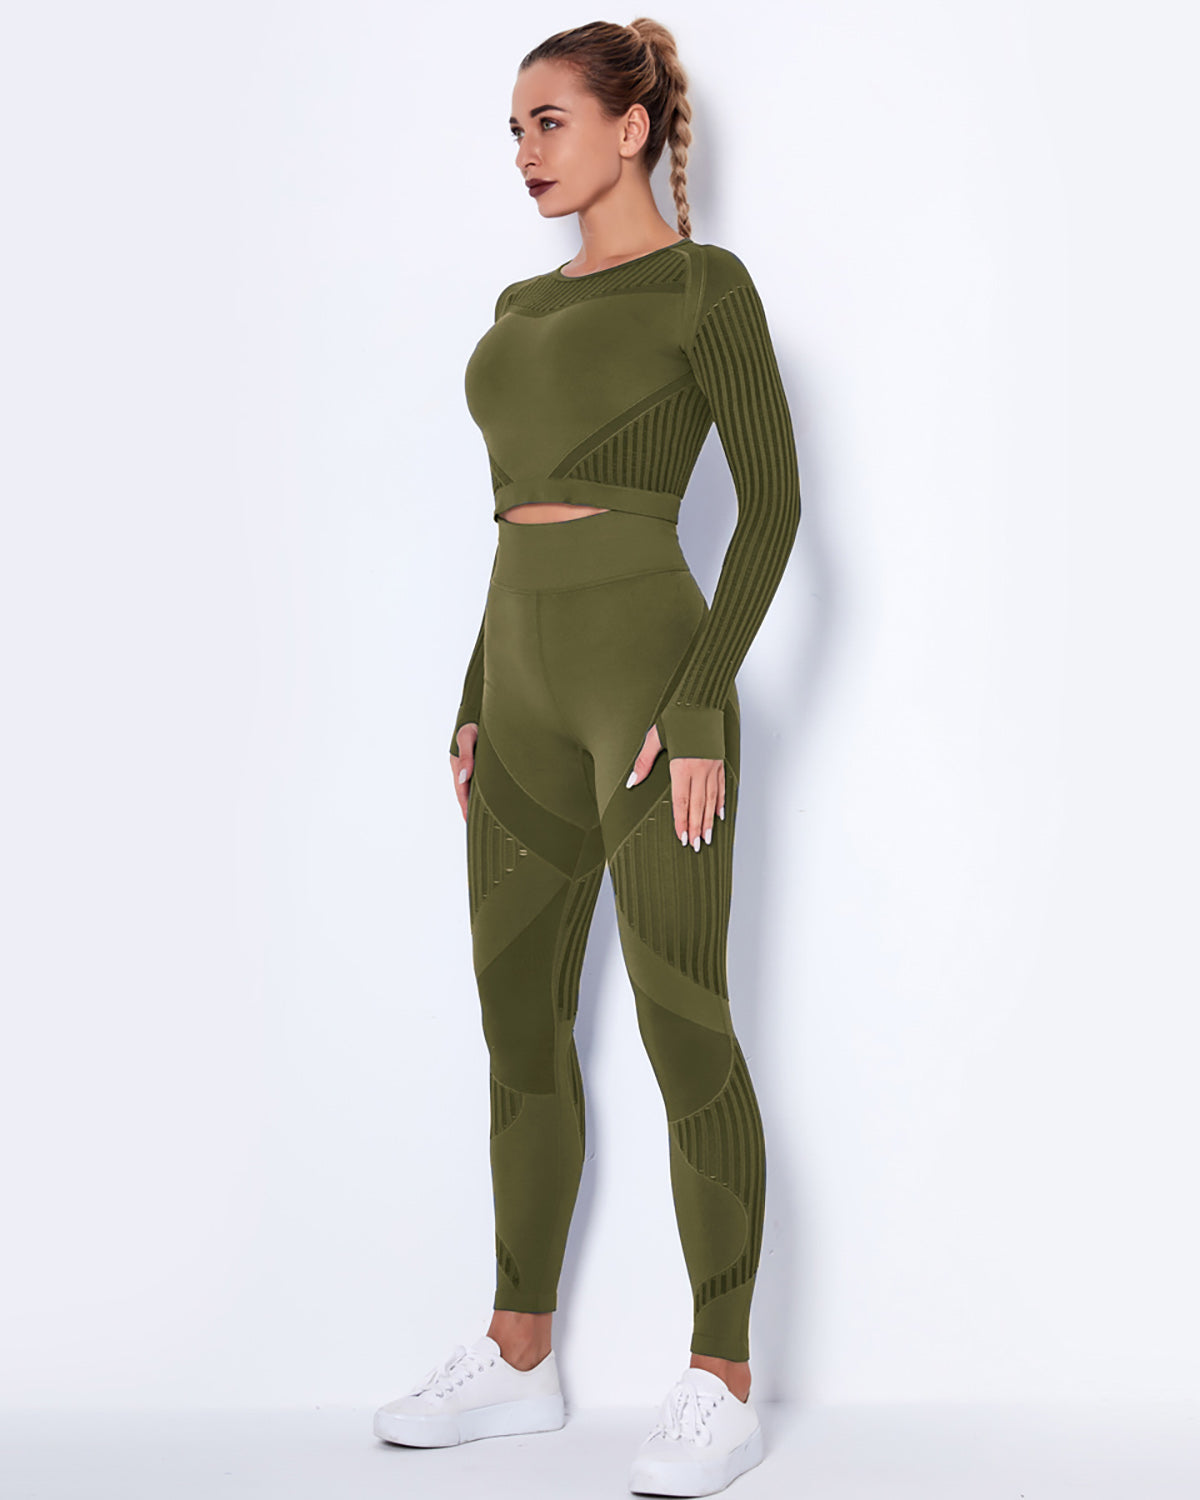 Lorica Long Sleeve - Army Green